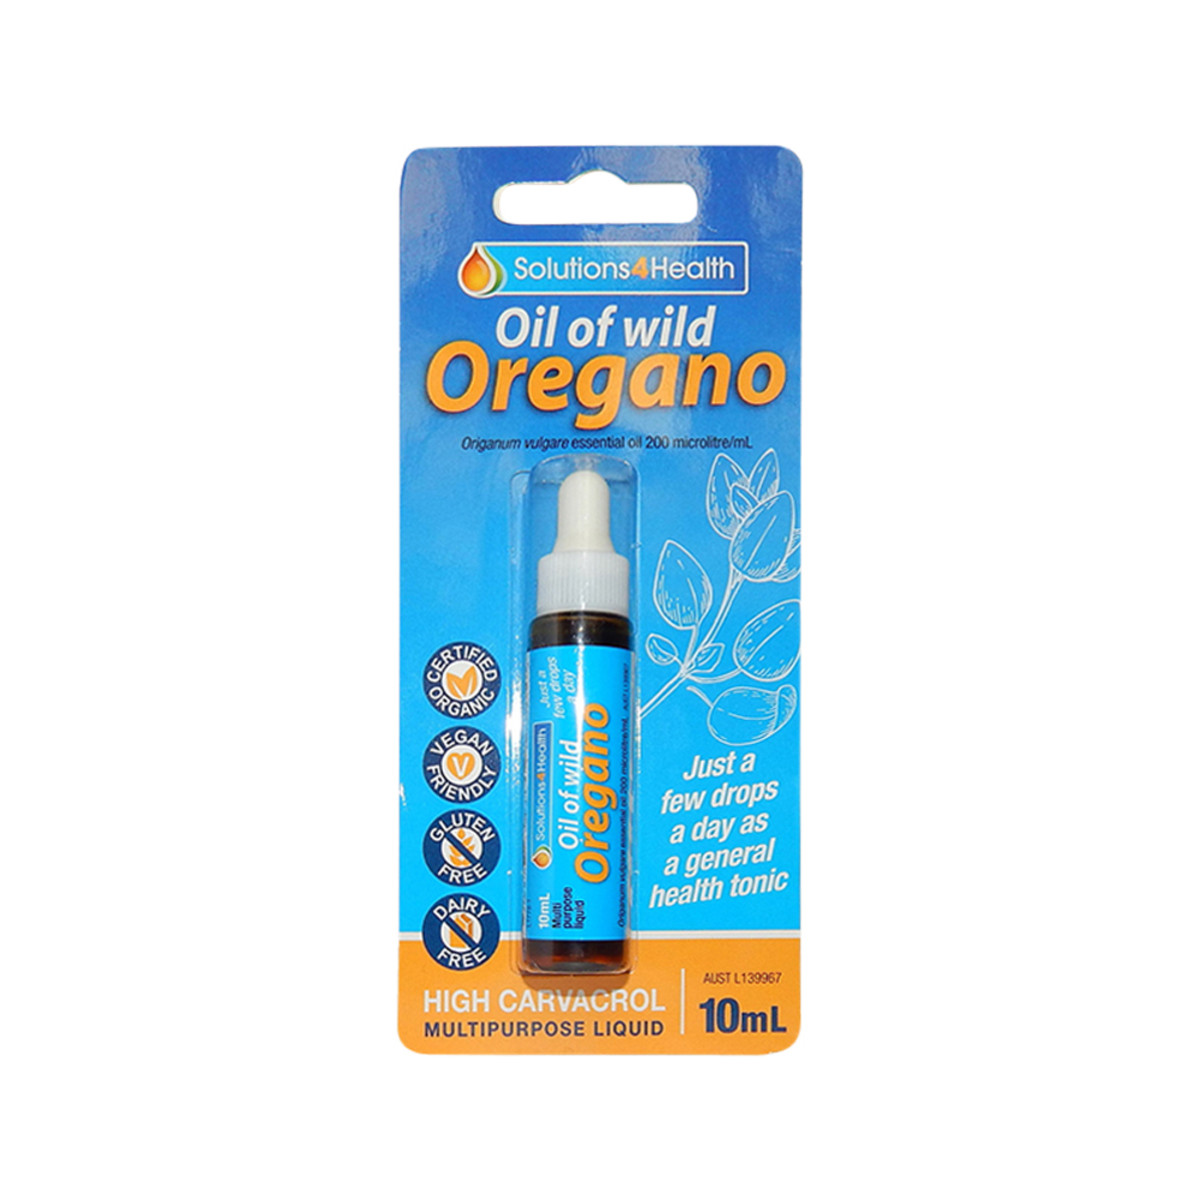 SOLUTIONS 4 HEALTH - Organic Oil of Wild Oregano 10ml